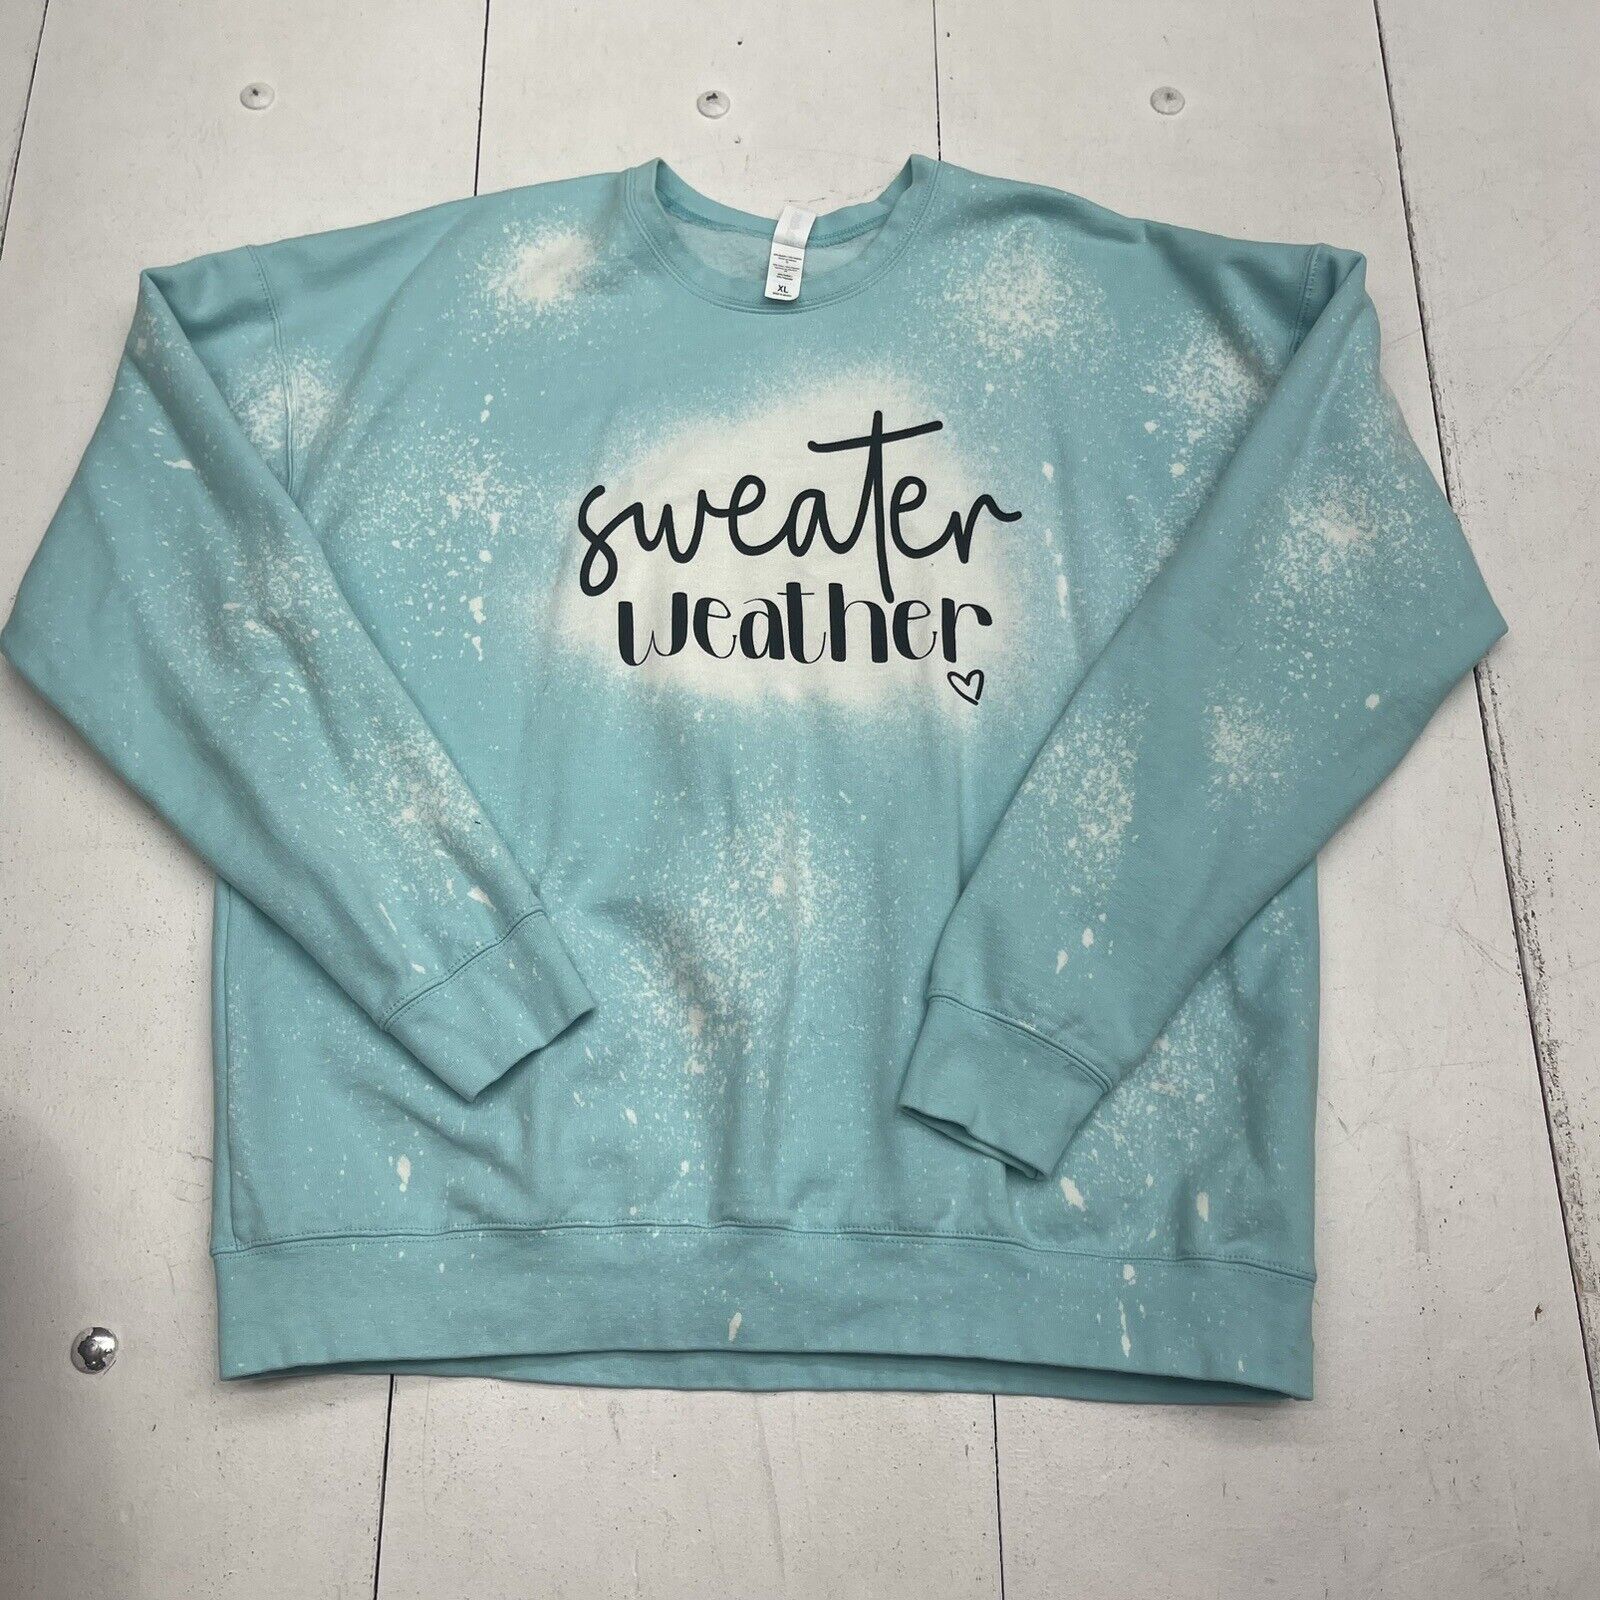 Custom Graphic Blue Sweater Weather Sweatshirt Women’s Size XL